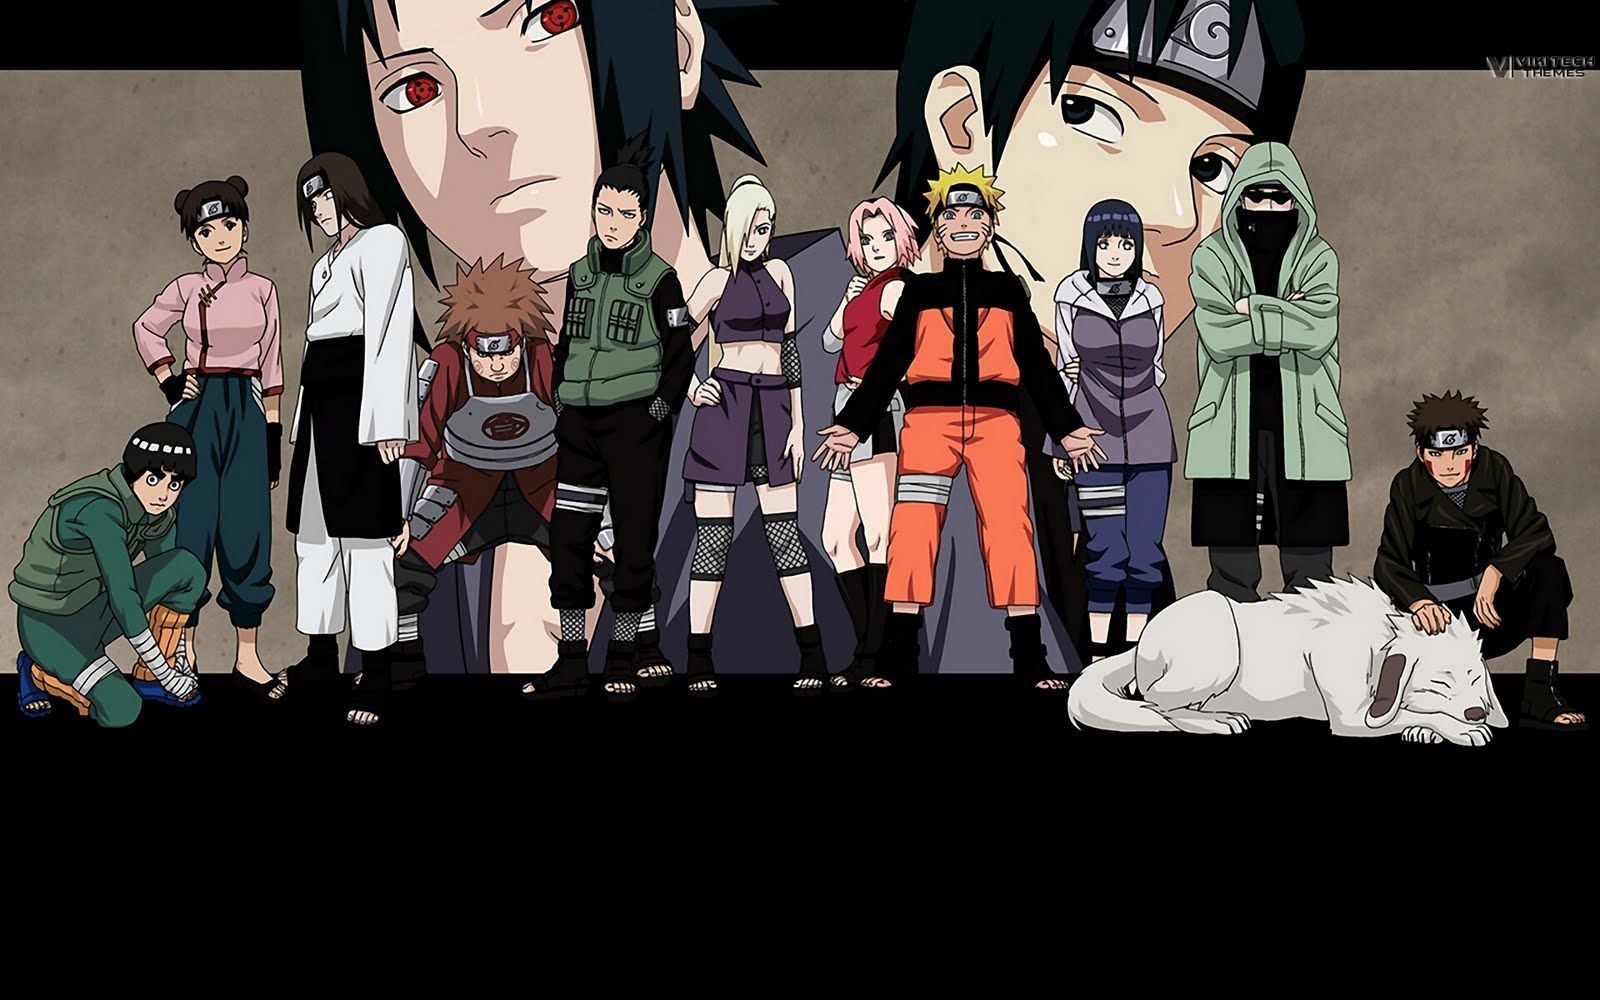 Naruto Shippuden wallpaper HD. Wallpaper, Background, Image